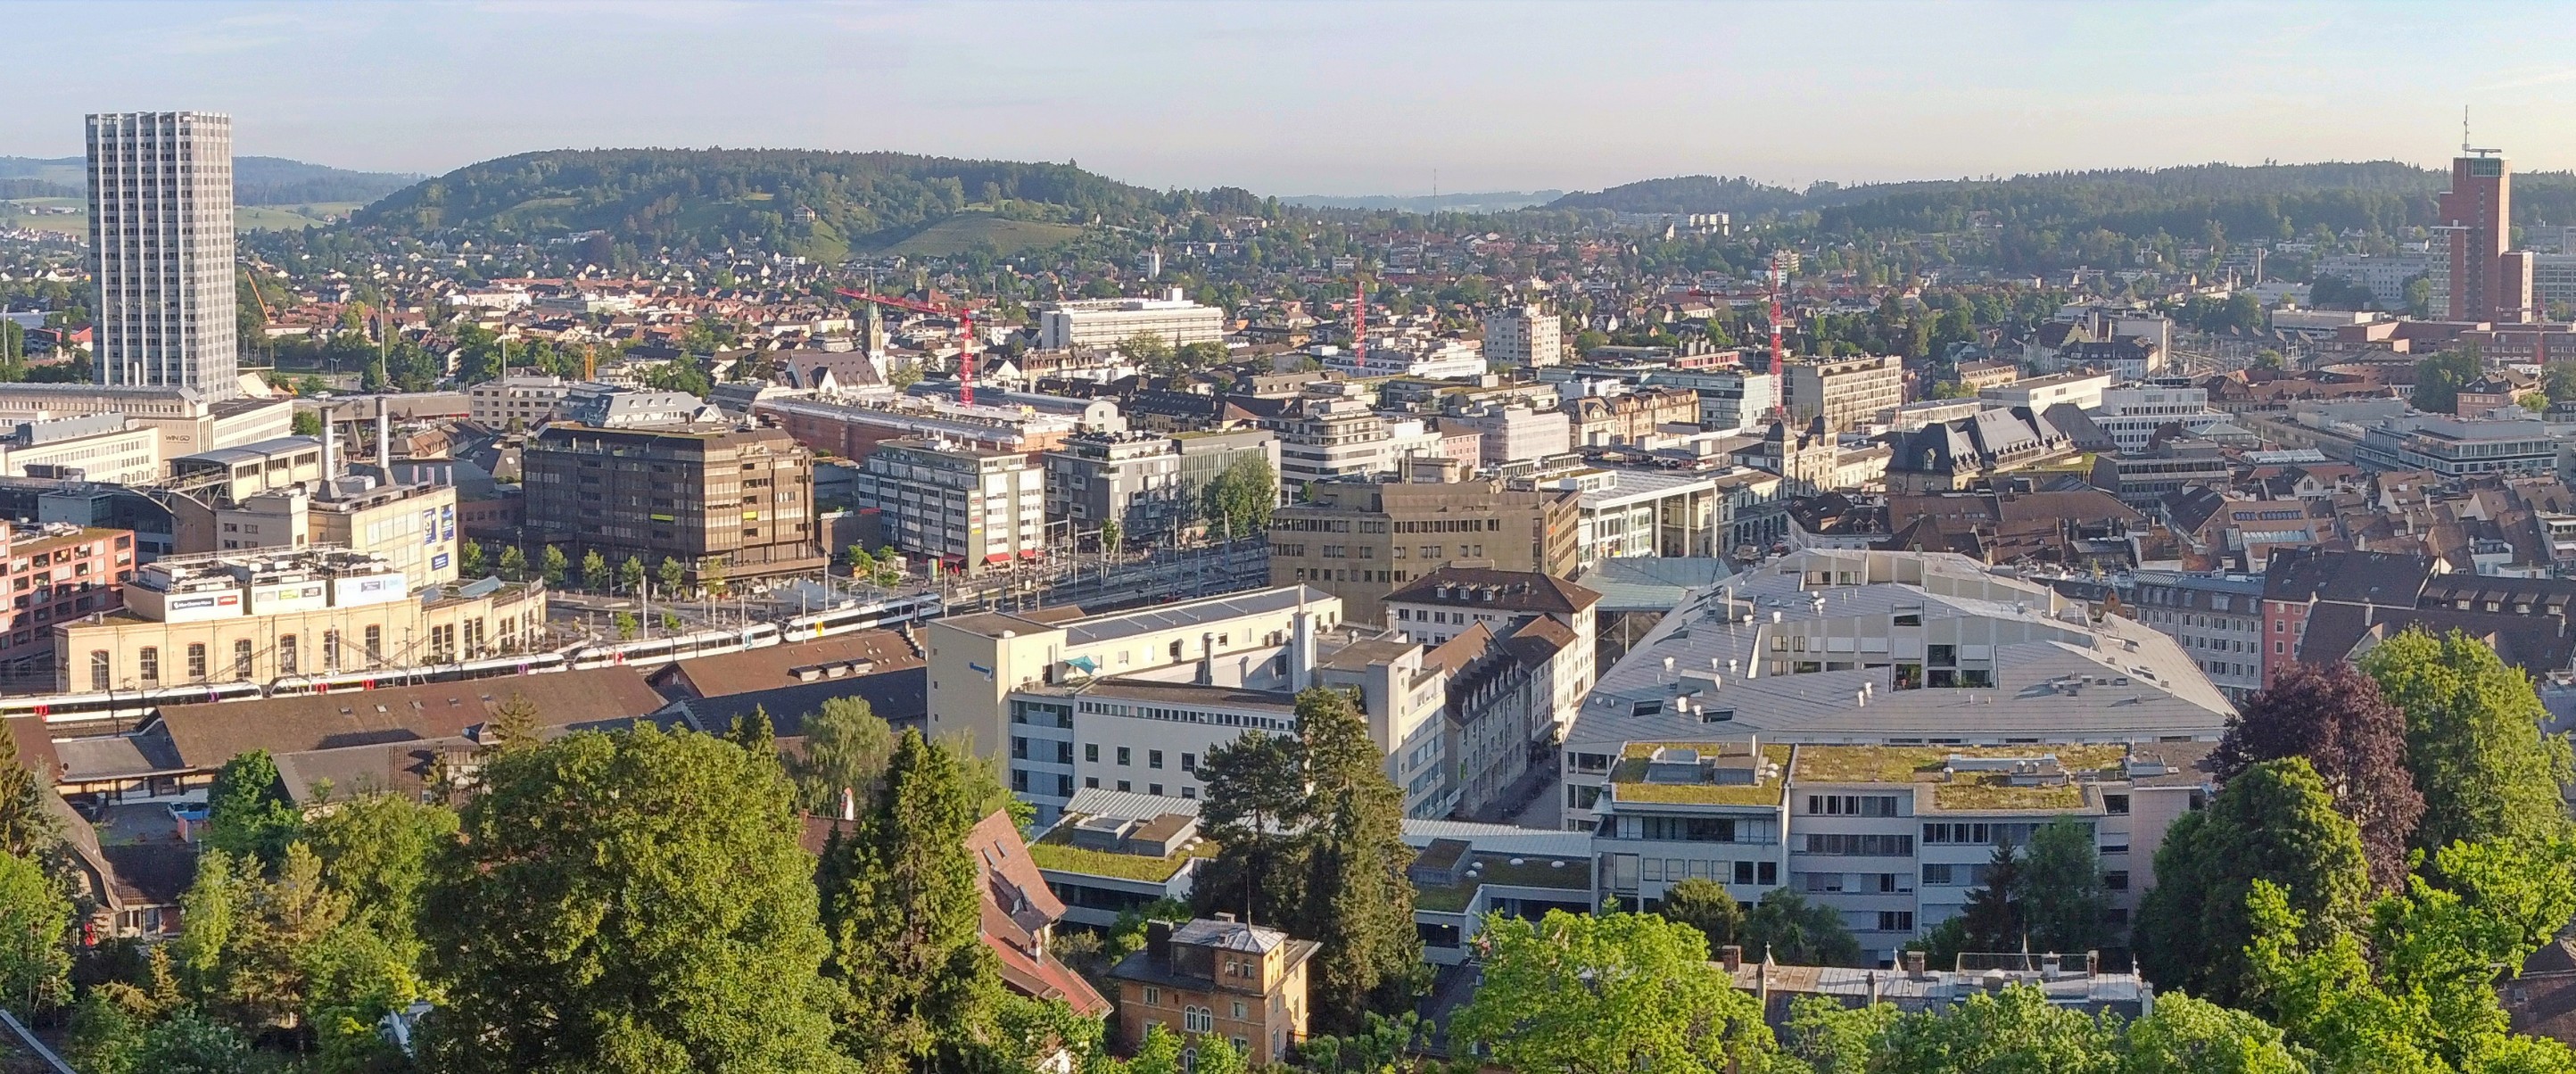 Vontobel in Winterthur - Panorama over the city of Winterthur